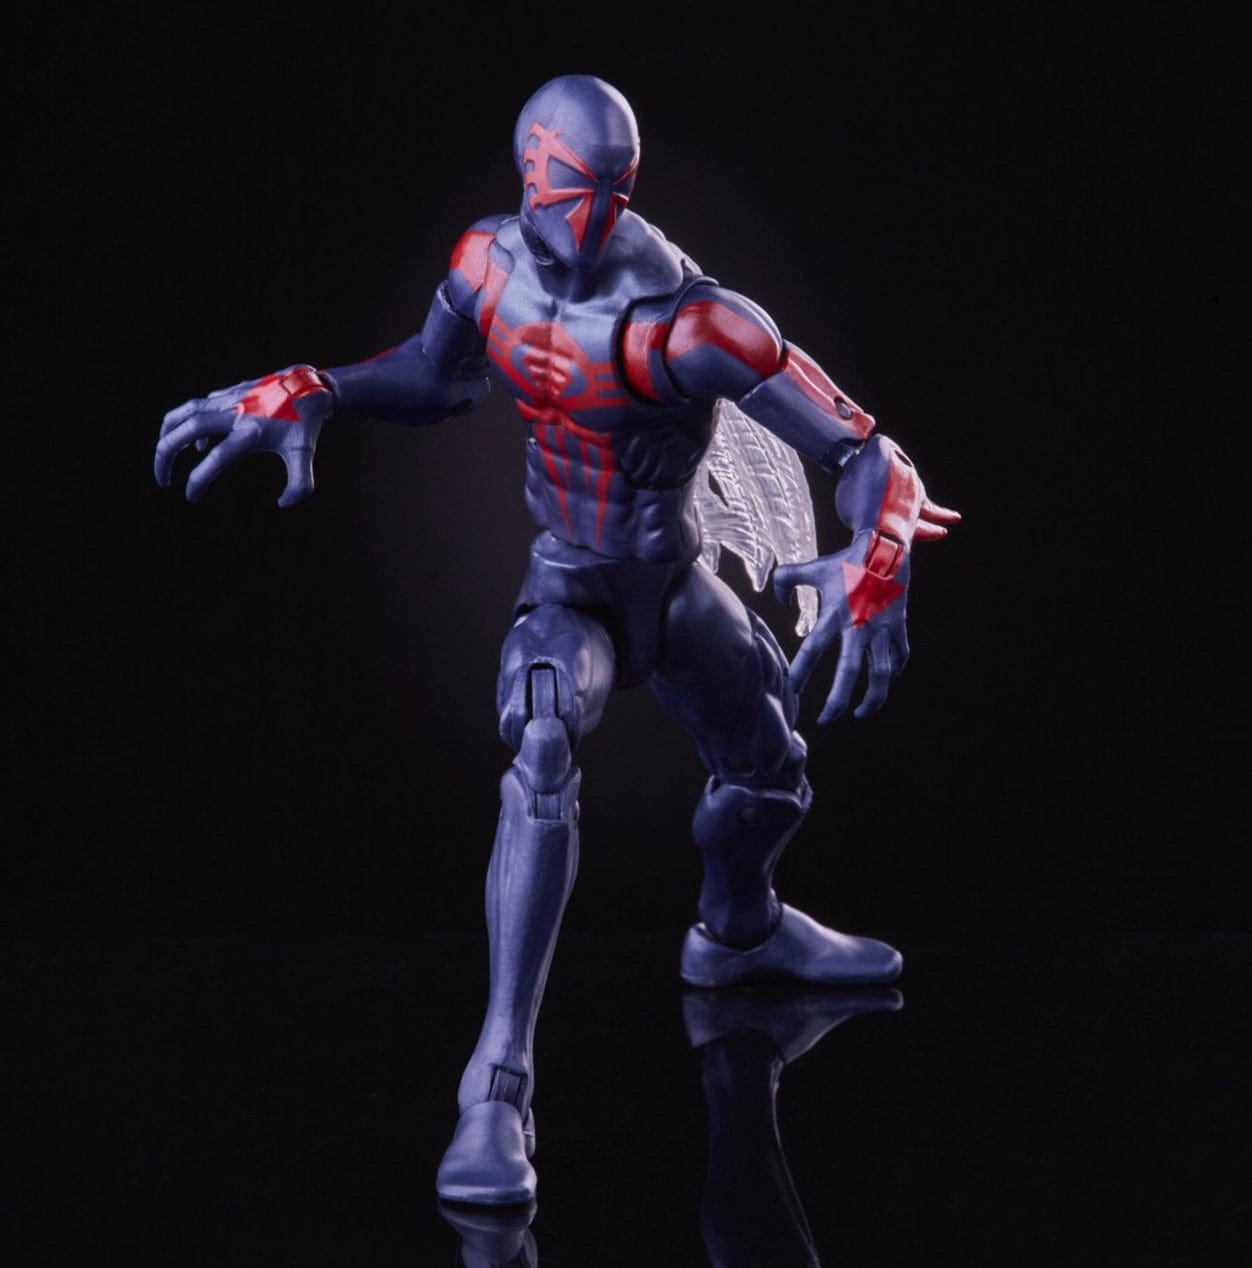 Spider-Man 2099: Marvel Legends Series Action Figure